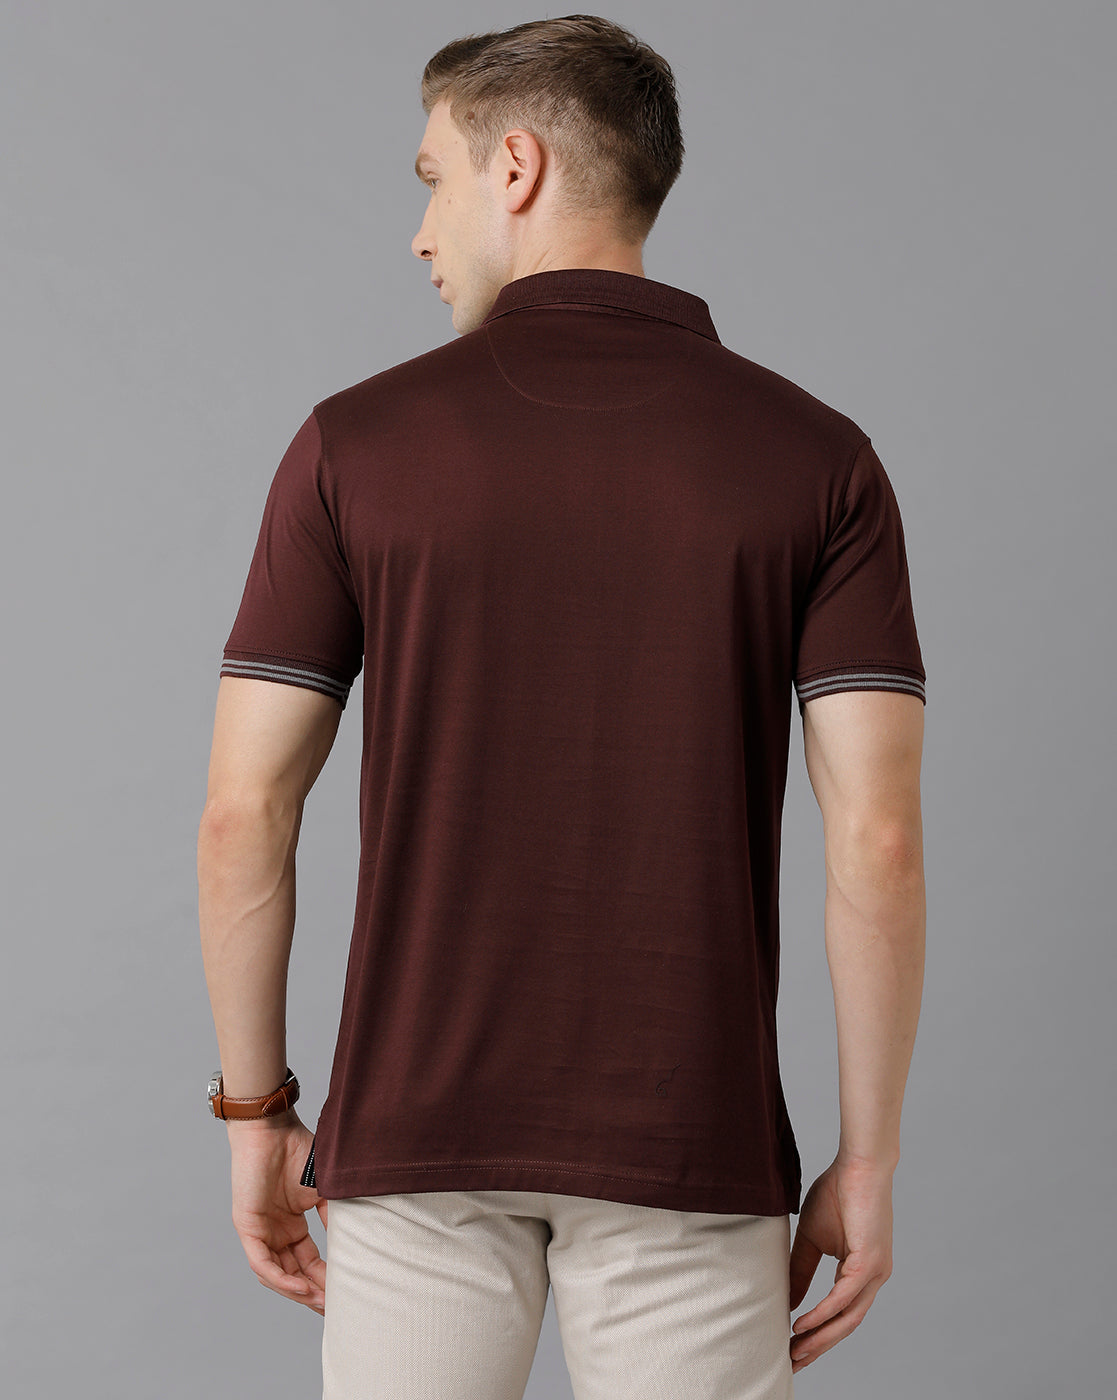 Classic Polo Men's Cotton Printed Slim Fit Brown T-Shirt | Prm - 738 A